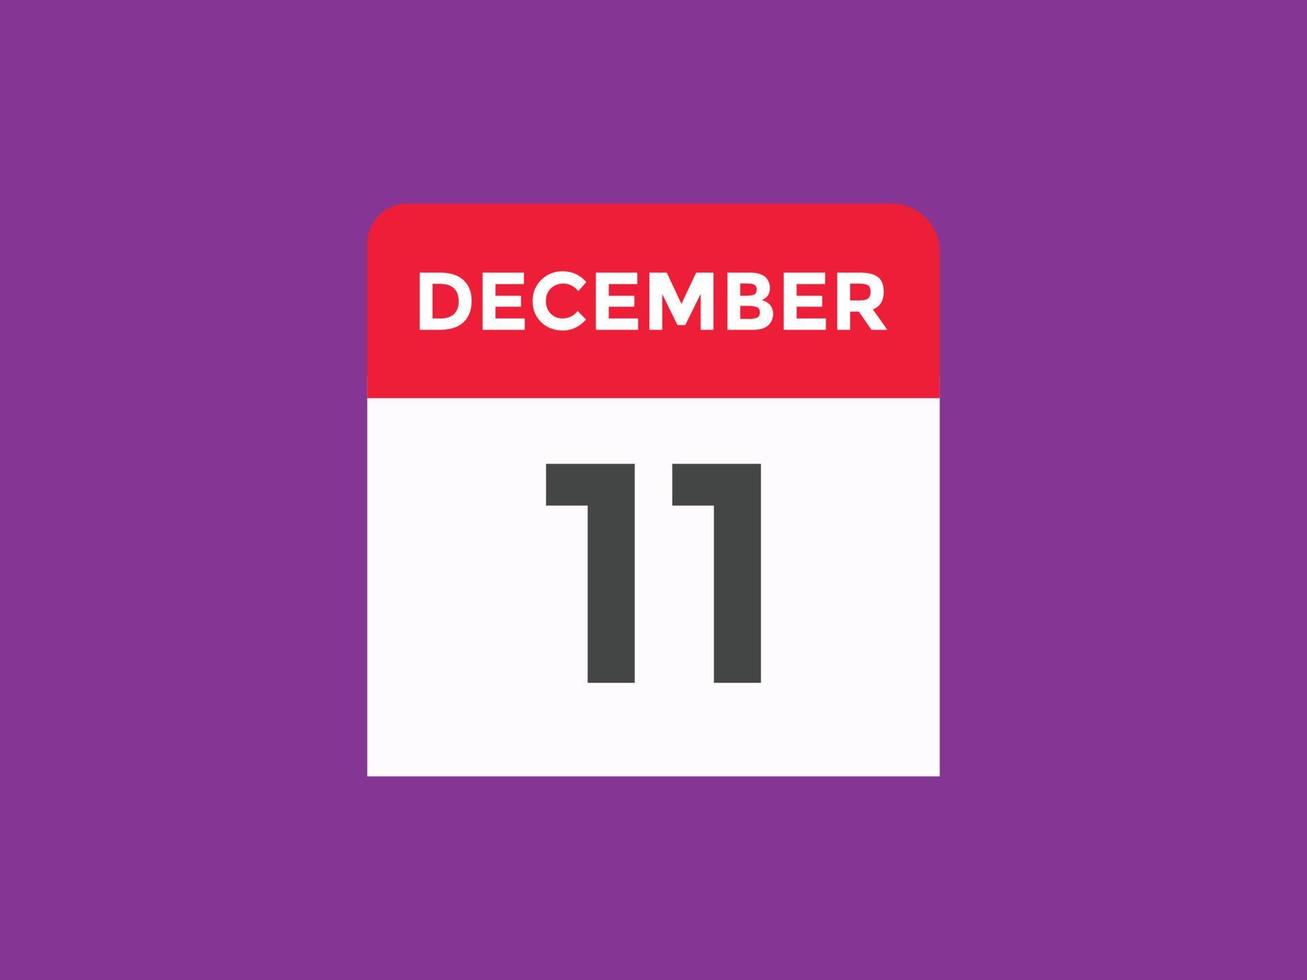 december 11 kalender påminnelse. 11th december dagligen kalender ikon mall. kalender 11th december ikon design mall. vektor illustration